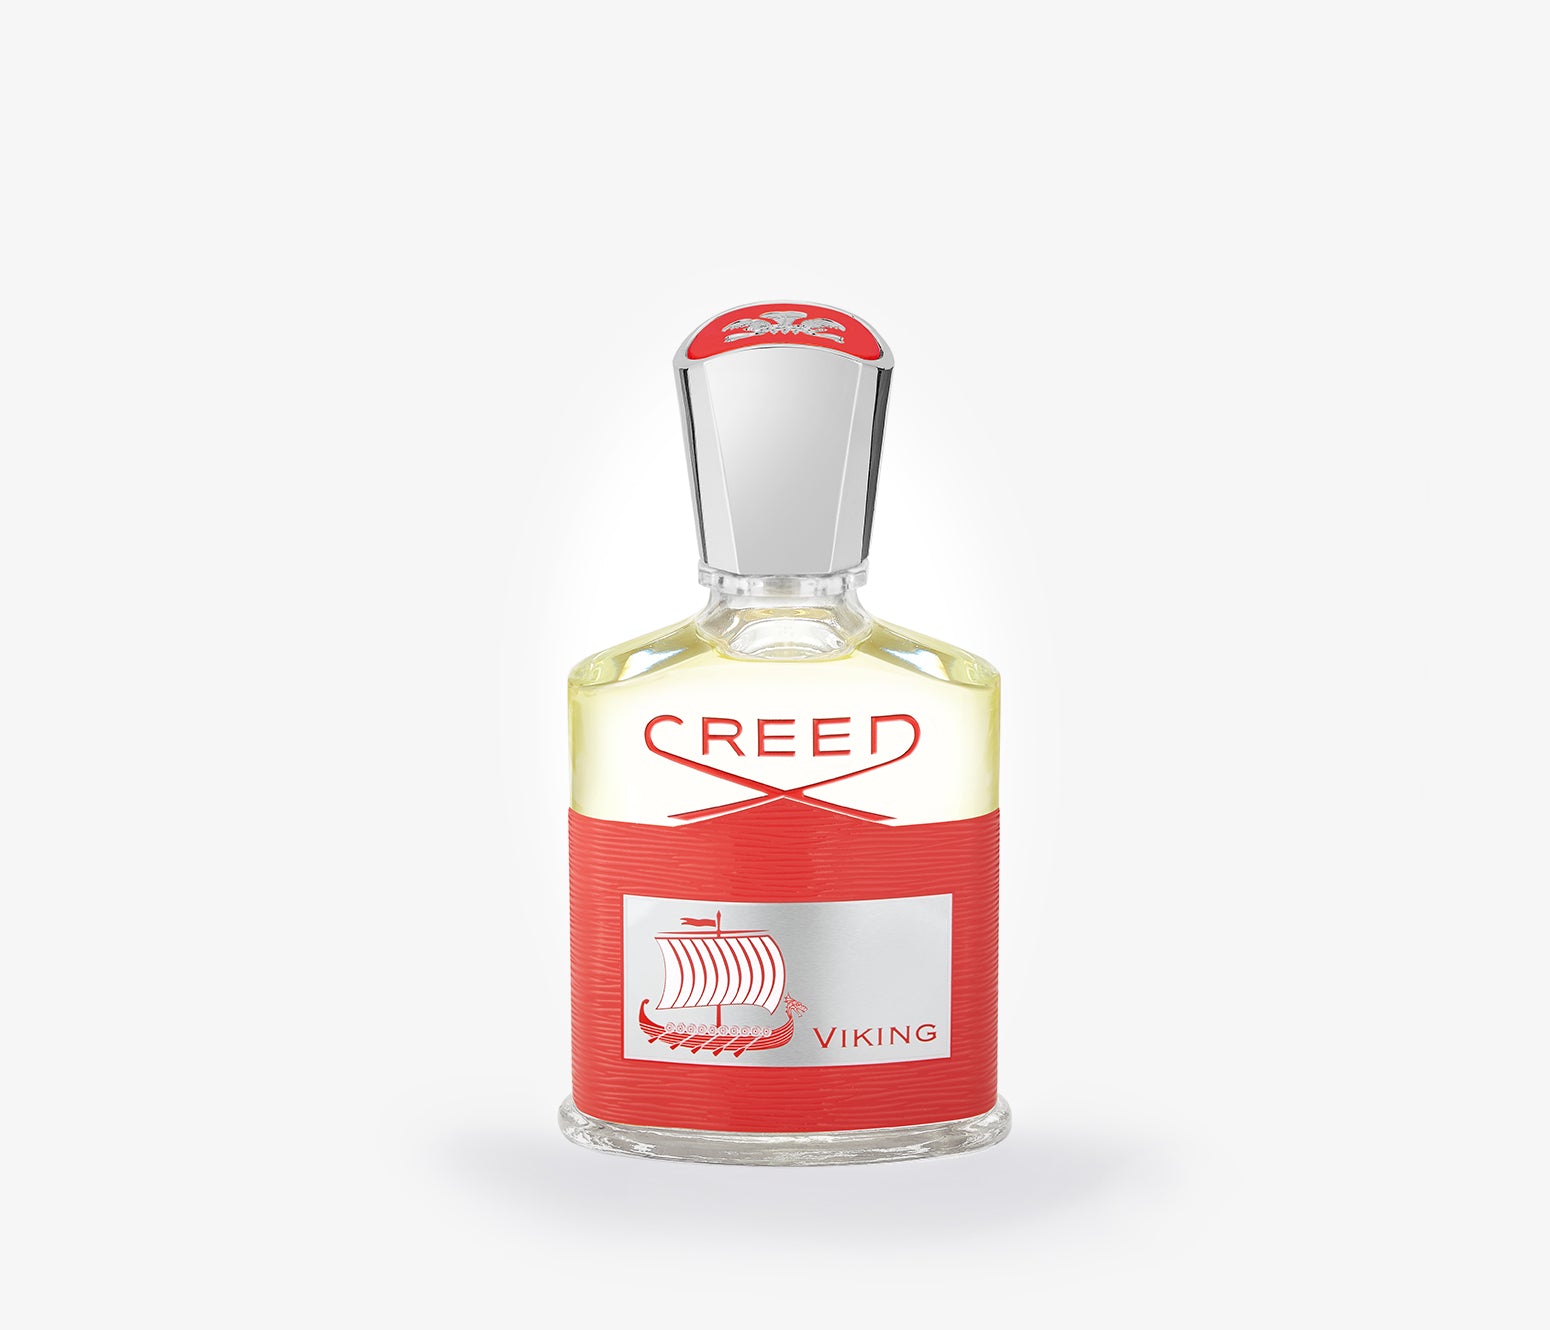 Creed - Viking - 100ml - SLY001 - product image - Fragrance - Les Senteurs